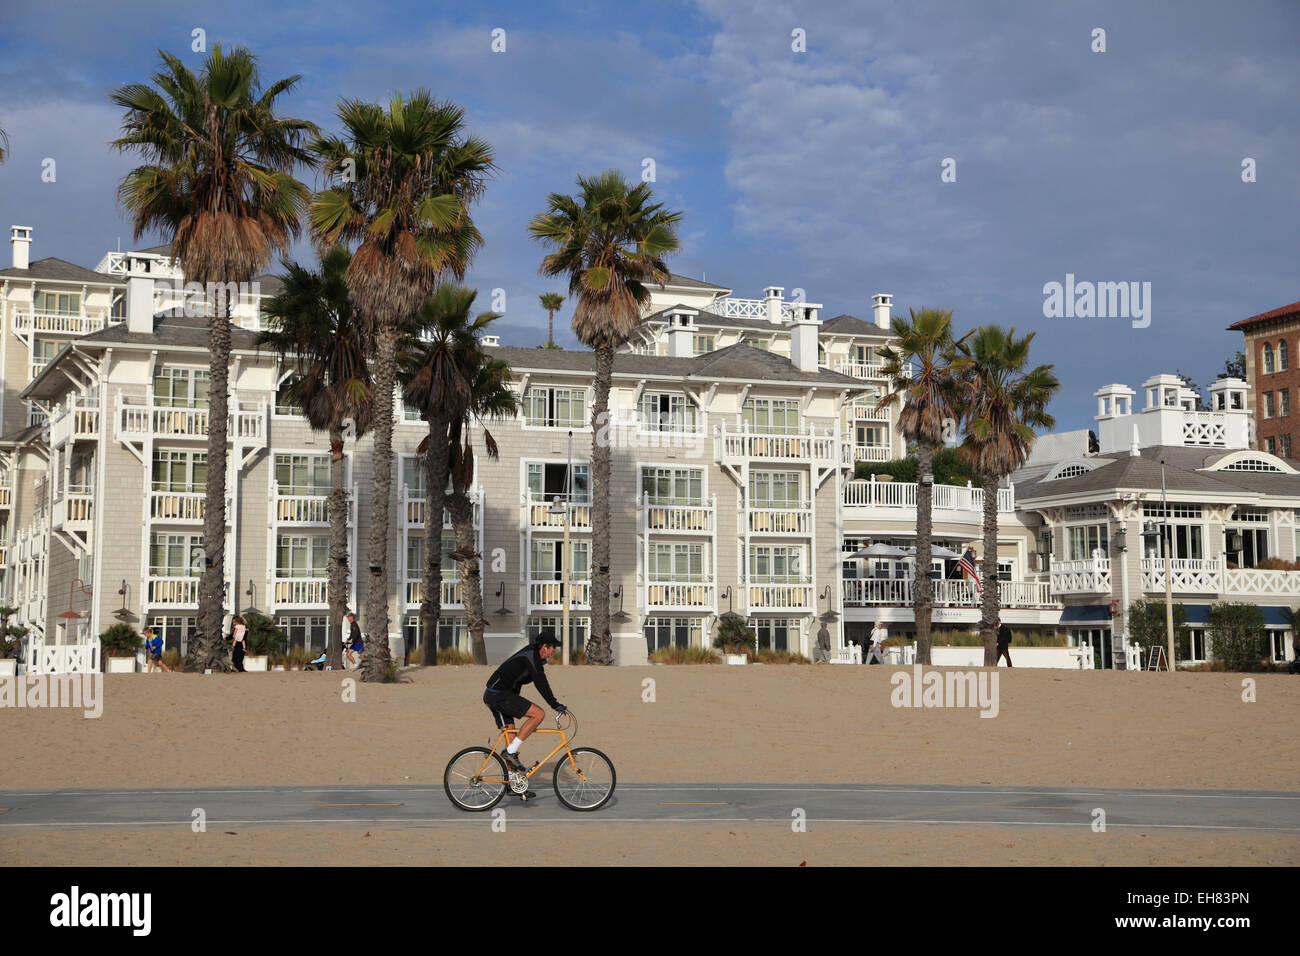 Der Strang, Santa Monica, Los Angeles, California, Vereinigte Staaten von Amerika, Nordamerika Stockfoto